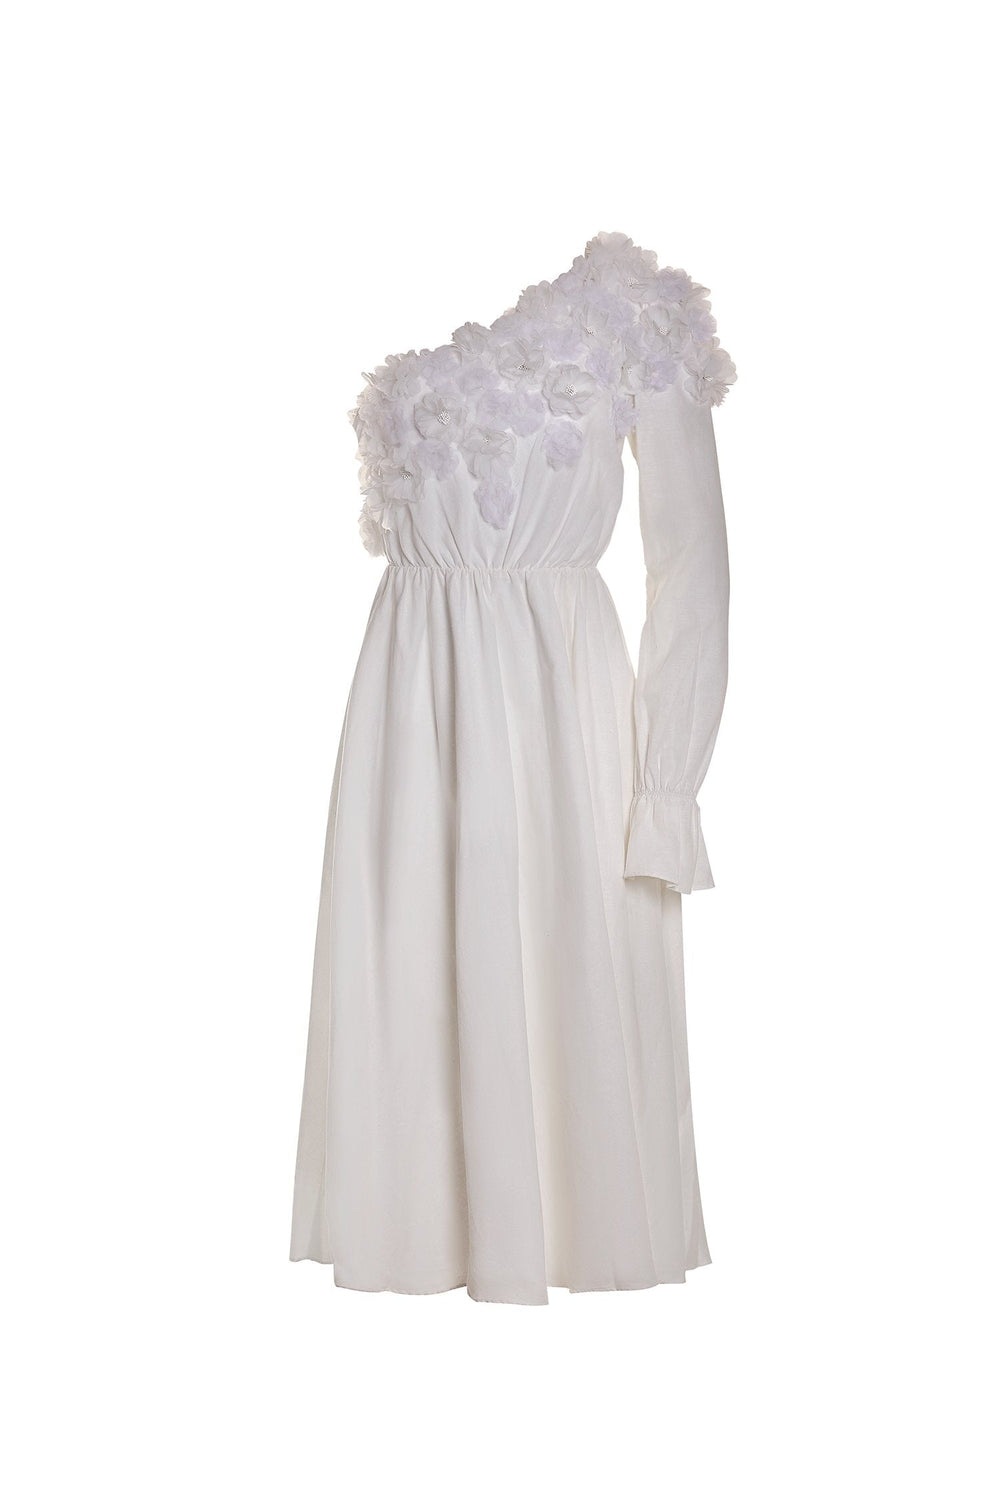 Adelena White One-Shoulder Dress